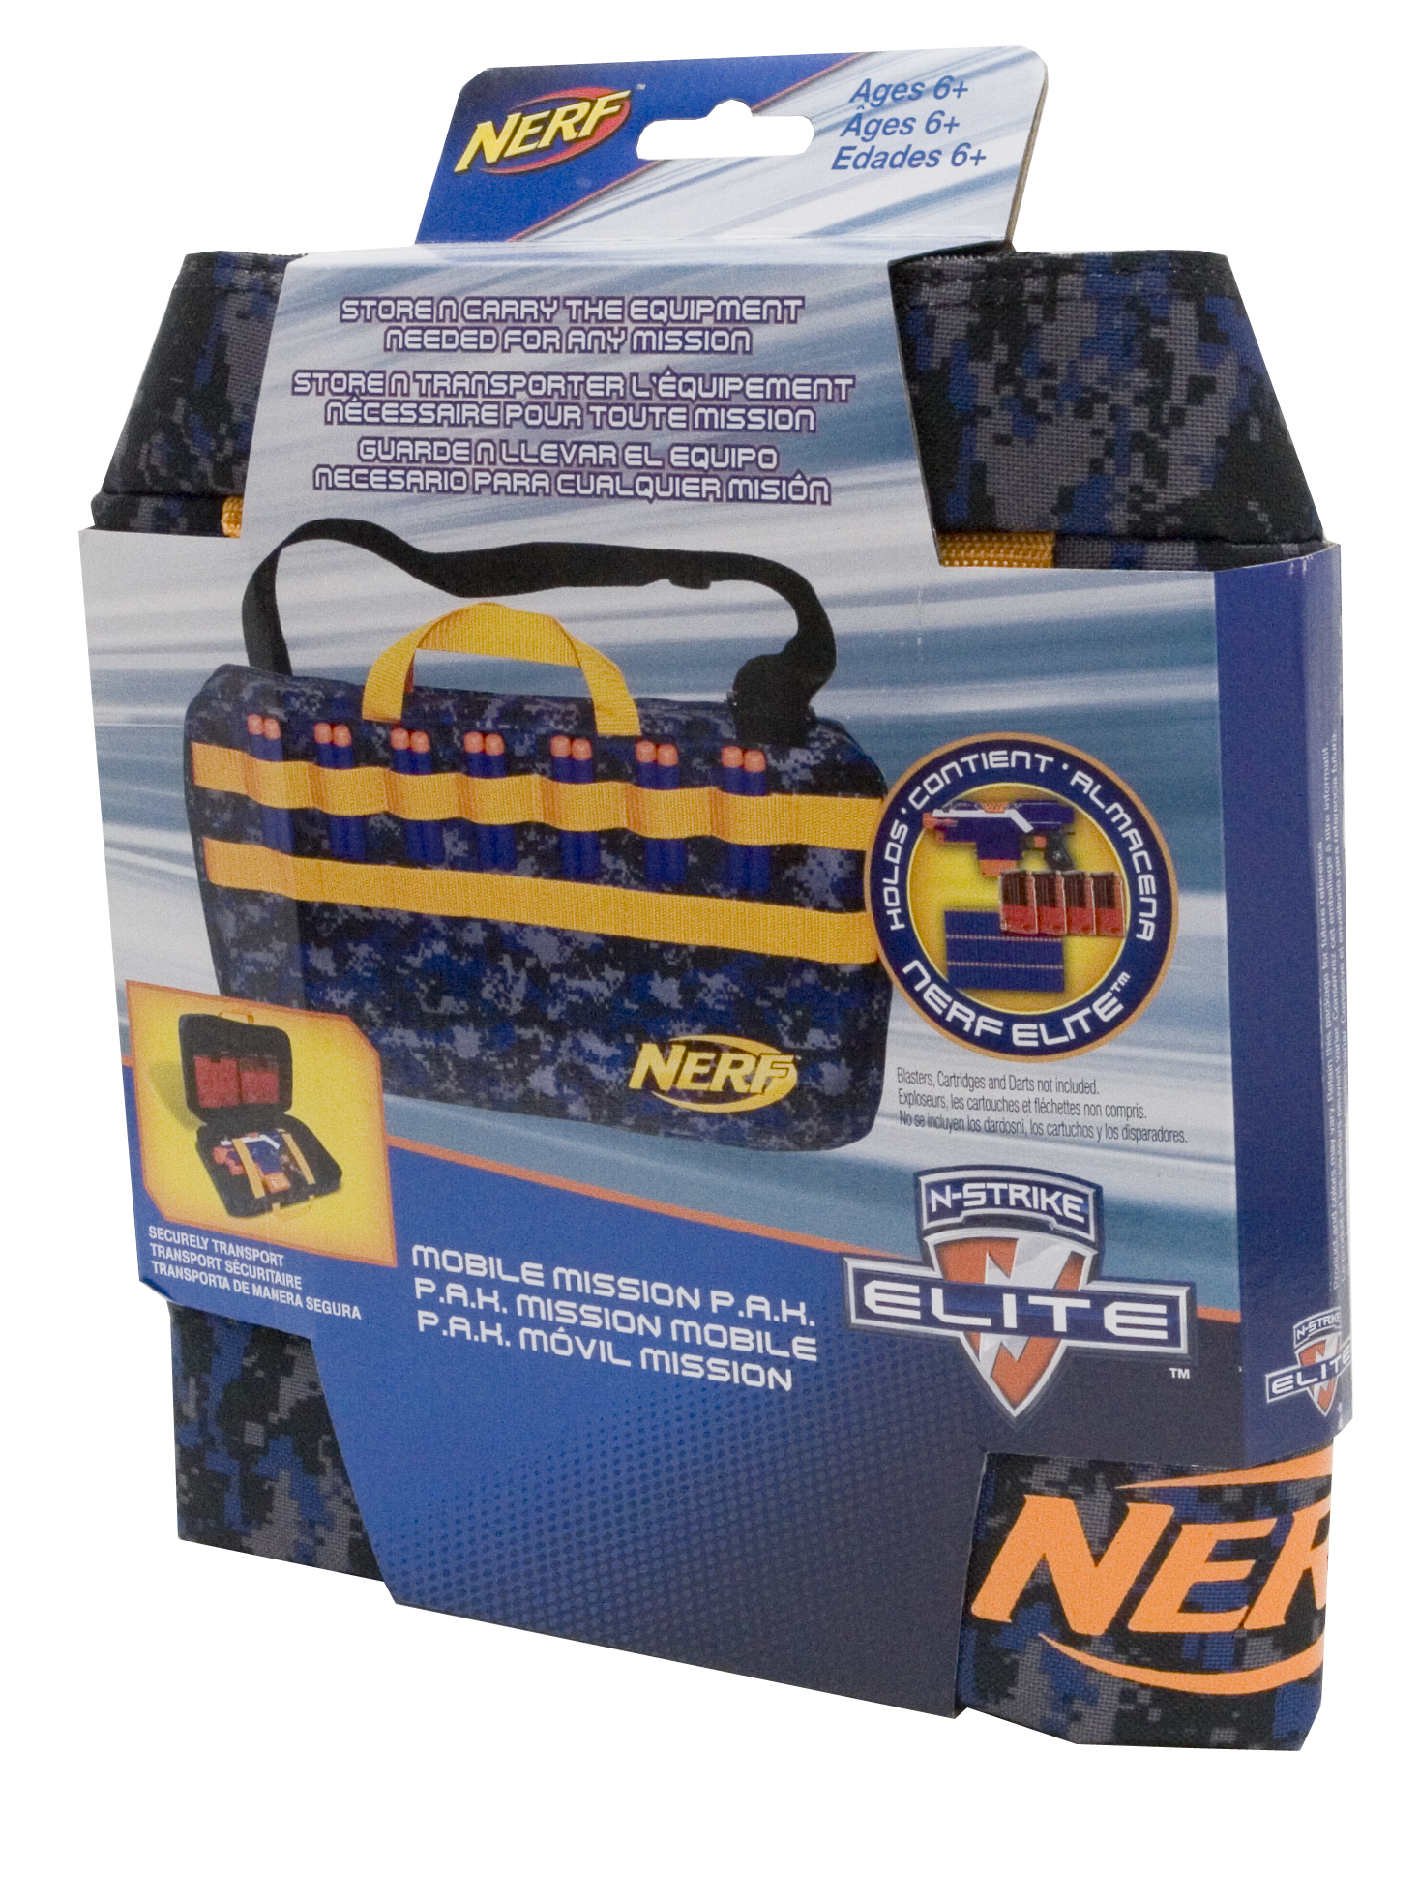 Nerf NERF ELITE MOBILE MISSION TRANSPORT CASE   Toys & Games   Outdoor